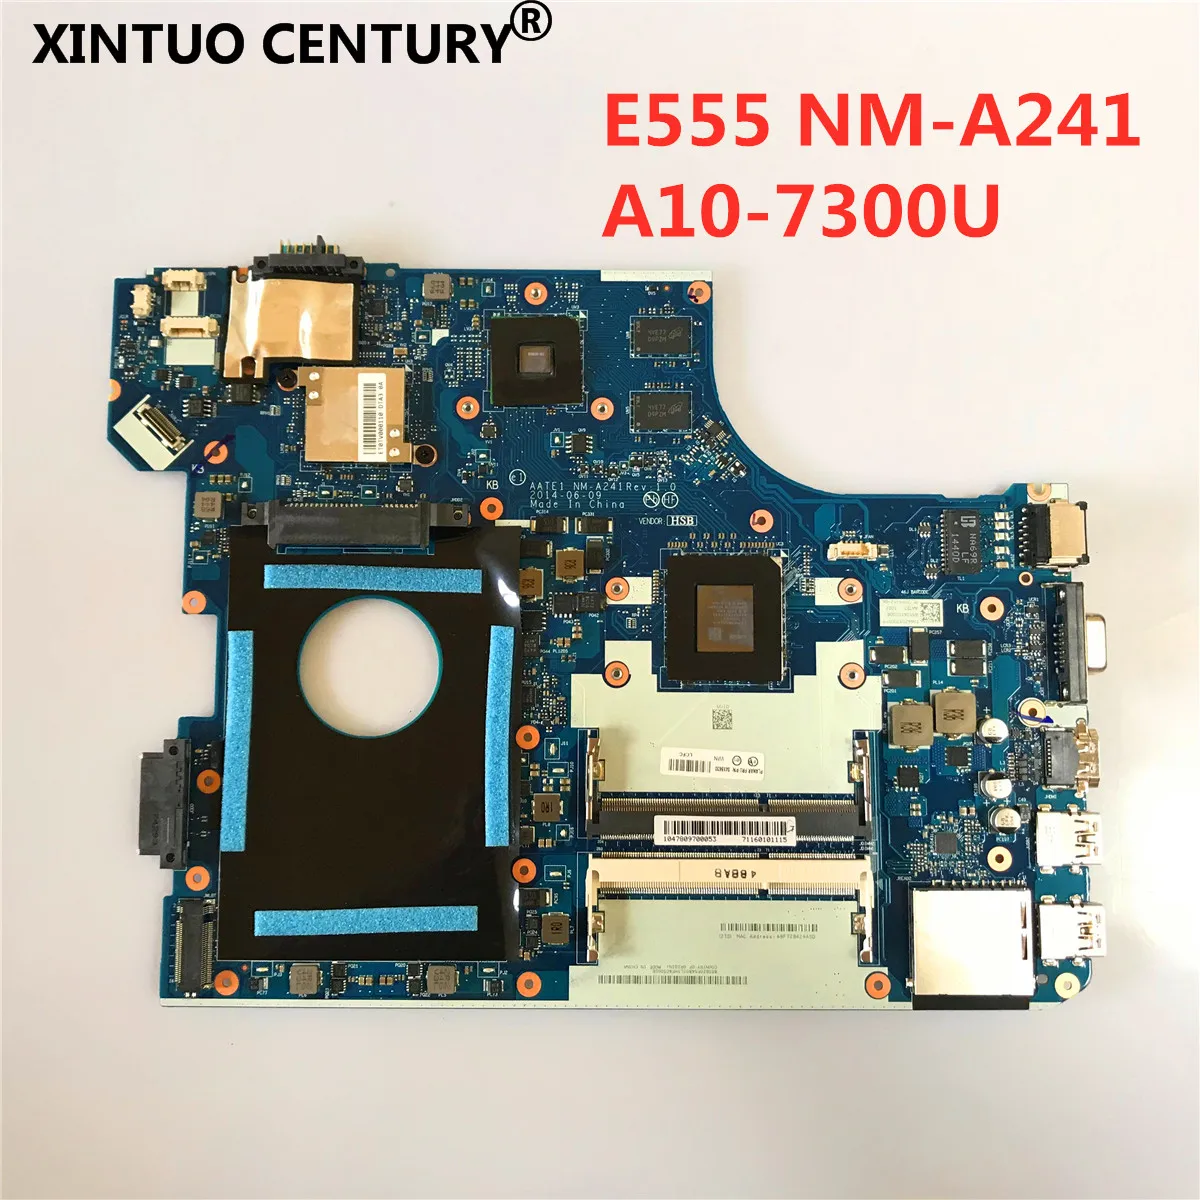 

For Lenovo ThinkPad E555 AATE1 NM-A241 Mianboard Laotop Motherboard E555 NM-A241 w/ A10-7300U CPU R5 M240 GPU